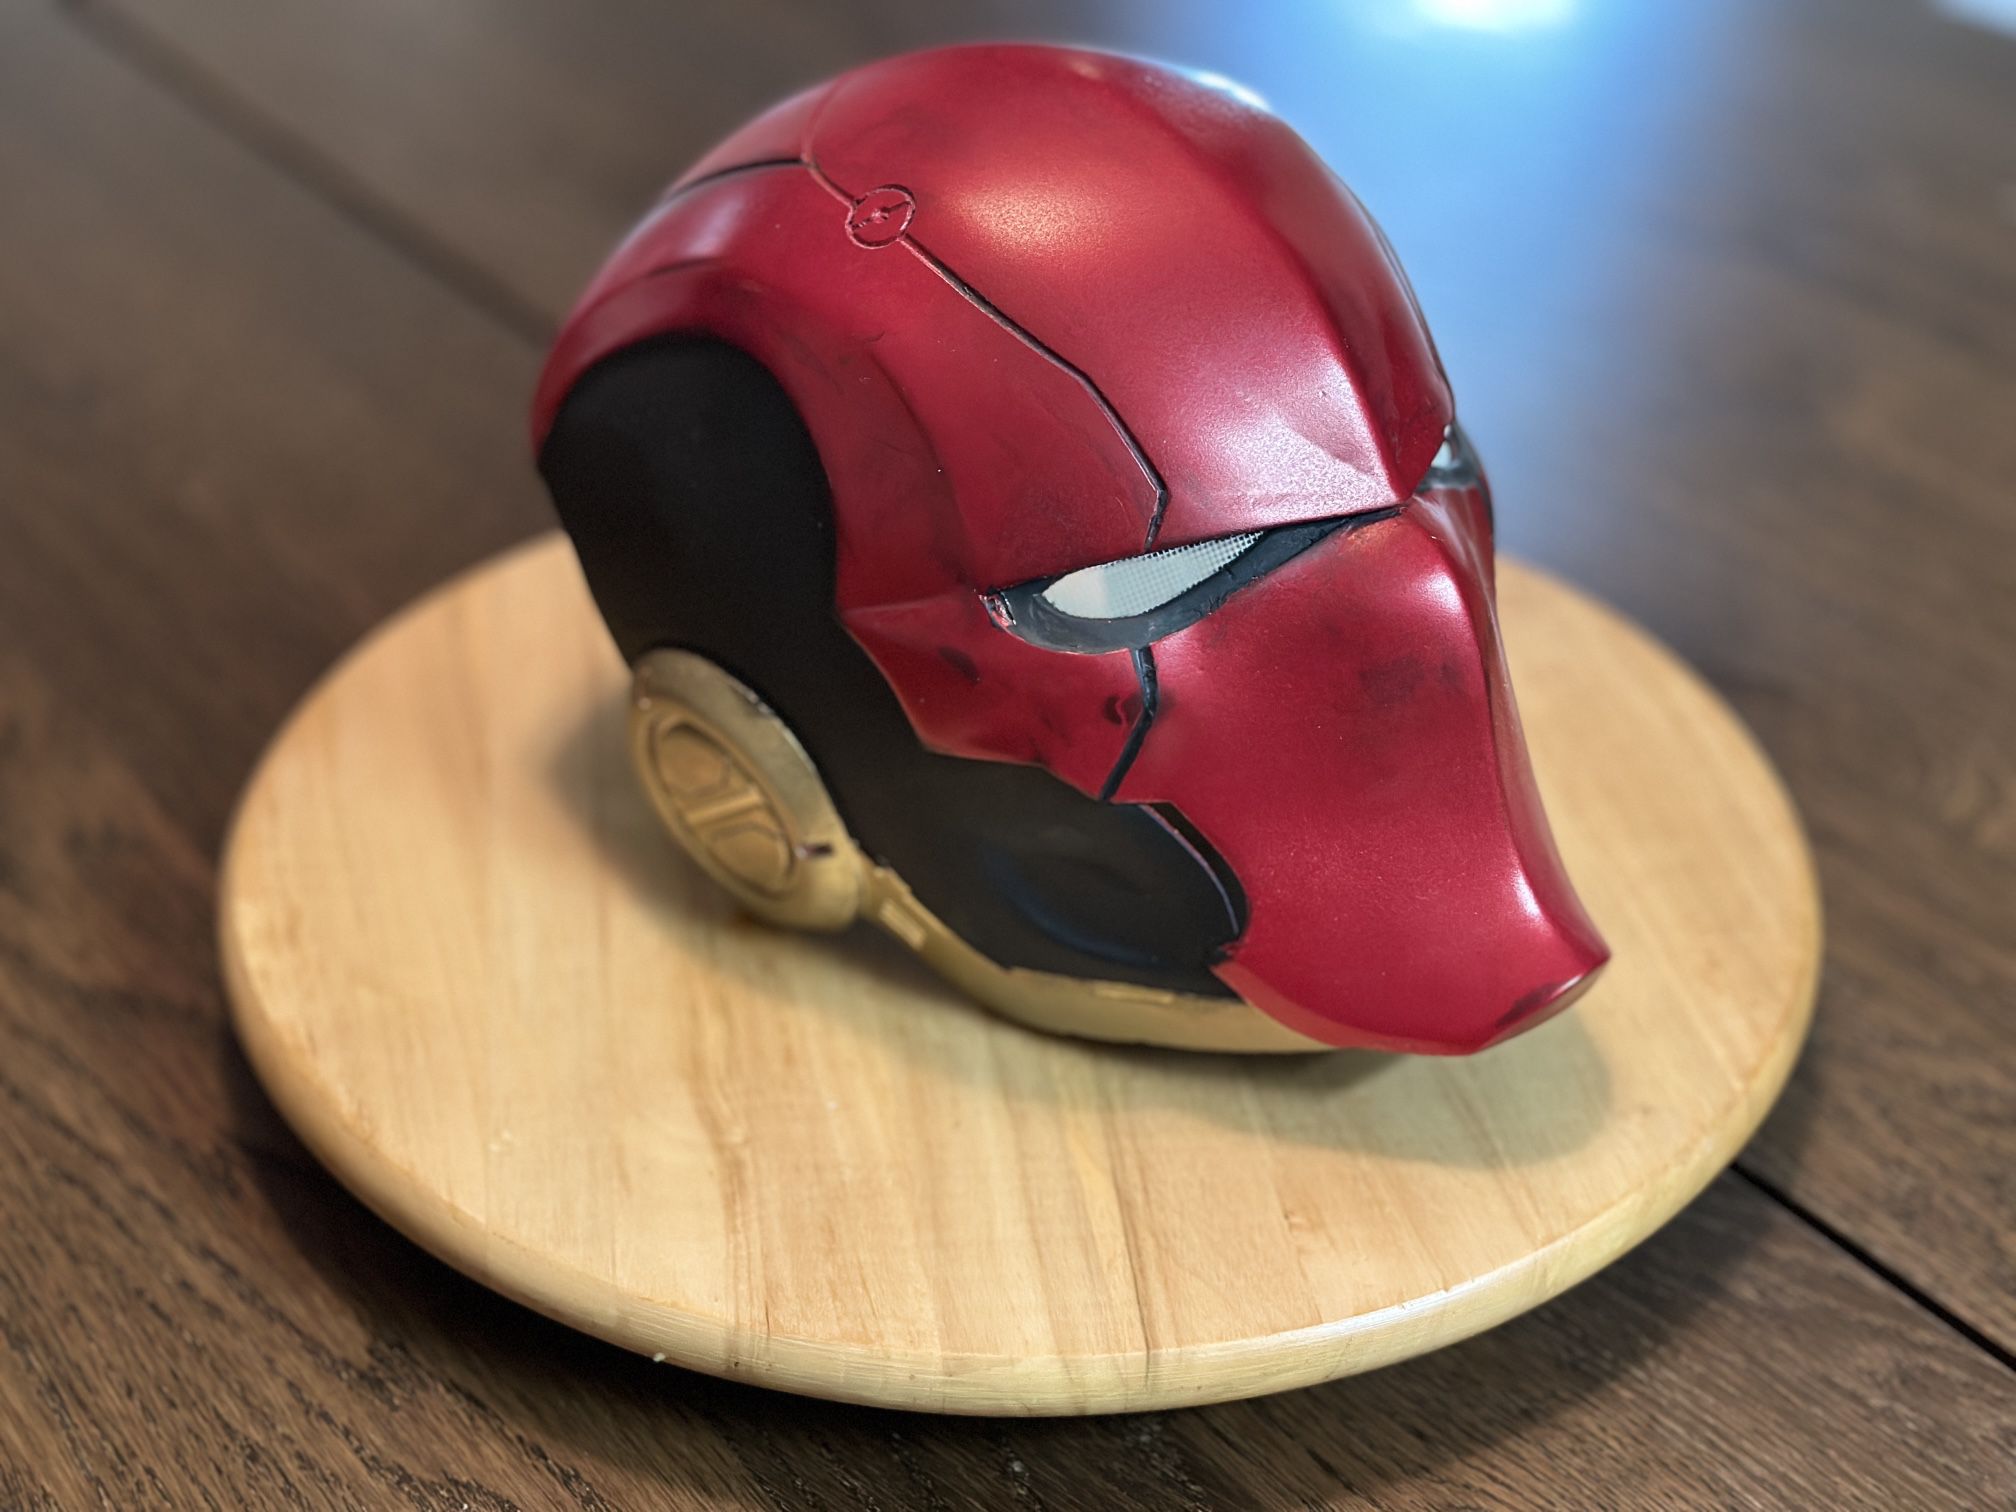 Prop Star Wars UMBRA, Red Ronin 3D Printed Helmet - CUSTOM | One Of A Kind | Worth $350 - Asking $175 Ea. ONLY